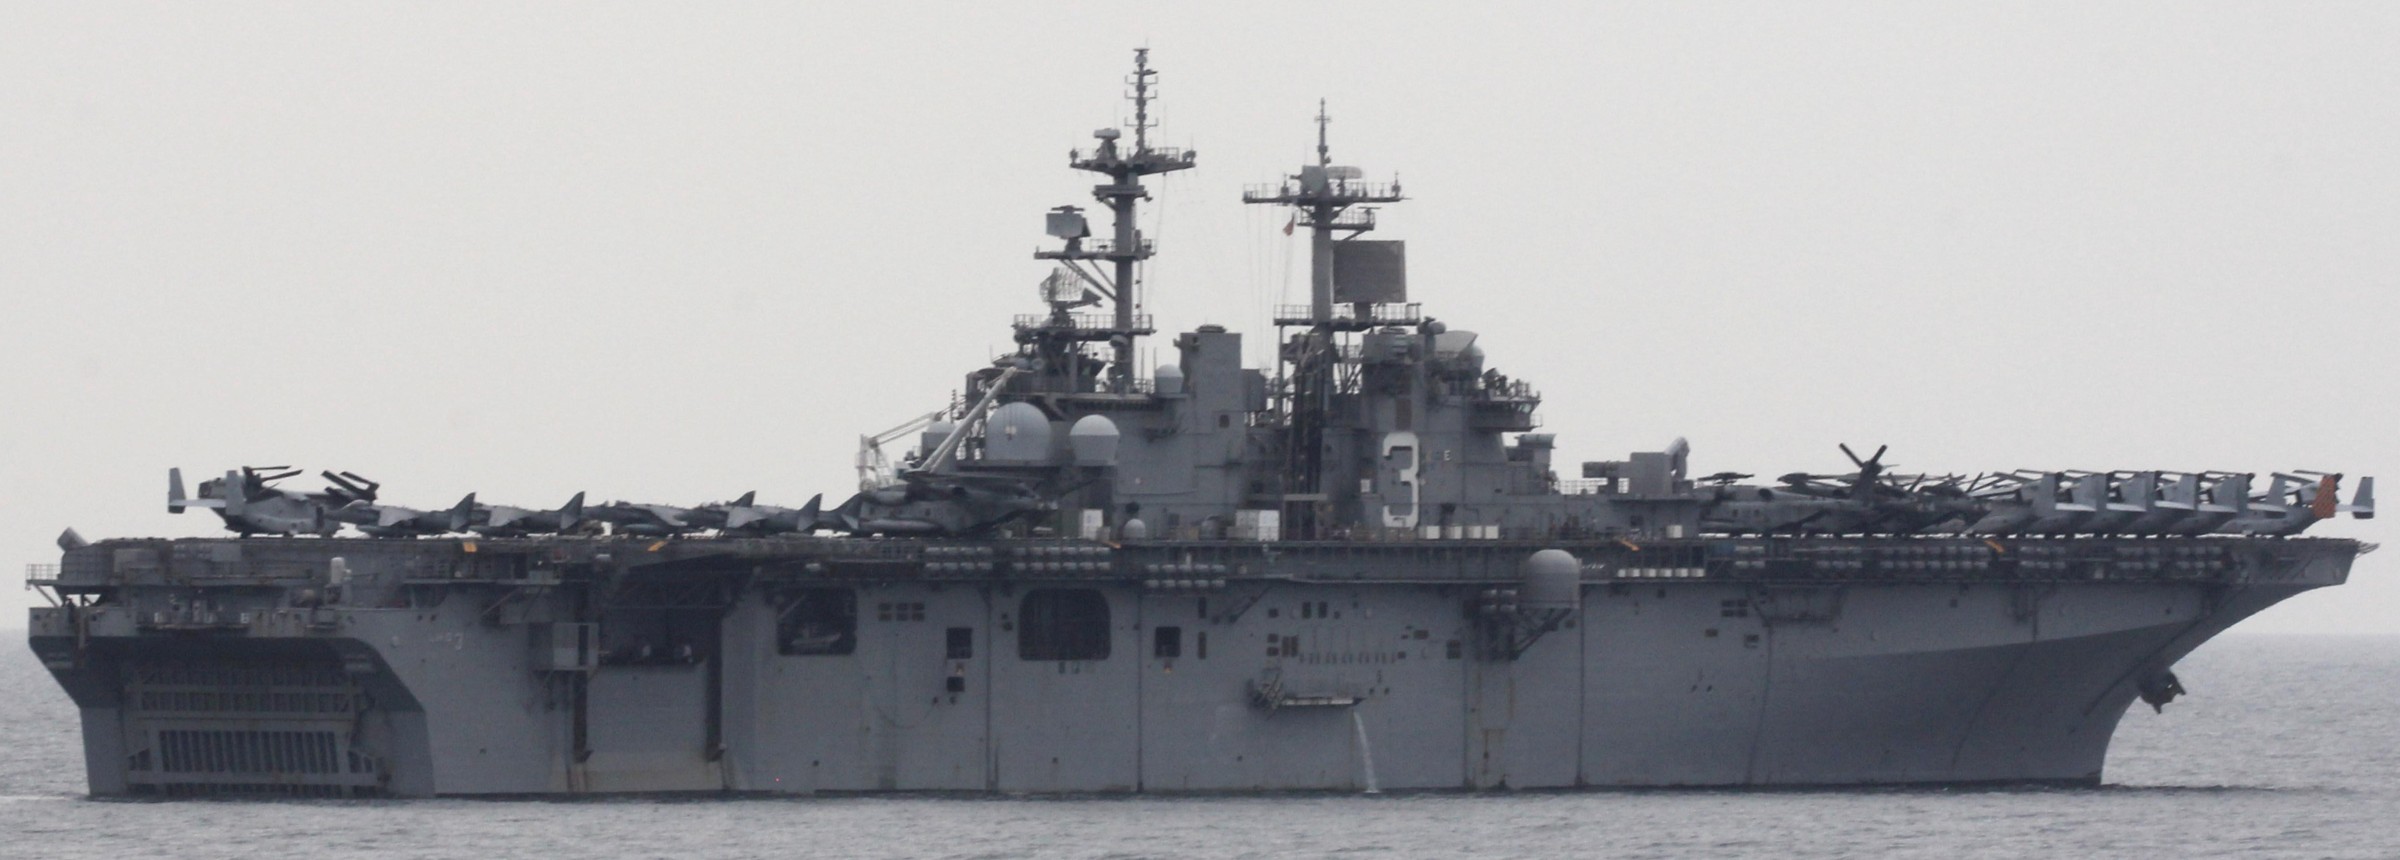 lhd-3 uss kearsarge wasp class amphibious assault ship us navy marines vmm-264 strait of hormuz 204